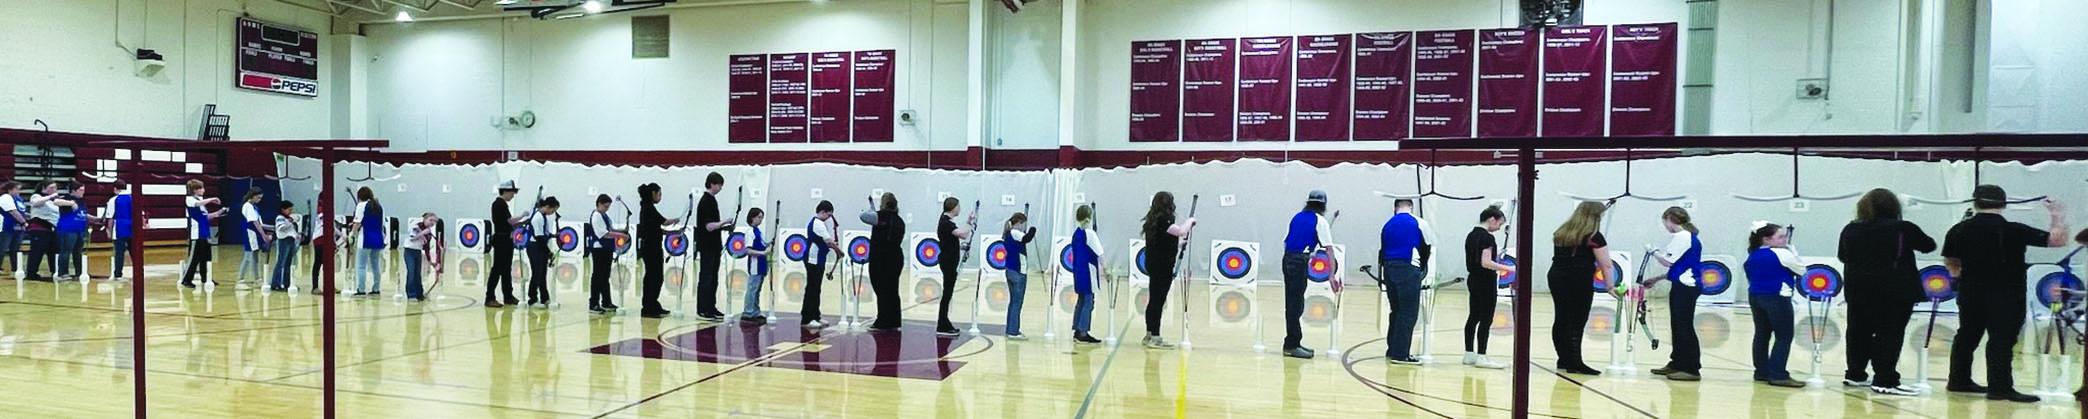 KHSAA Archery Tournament Time